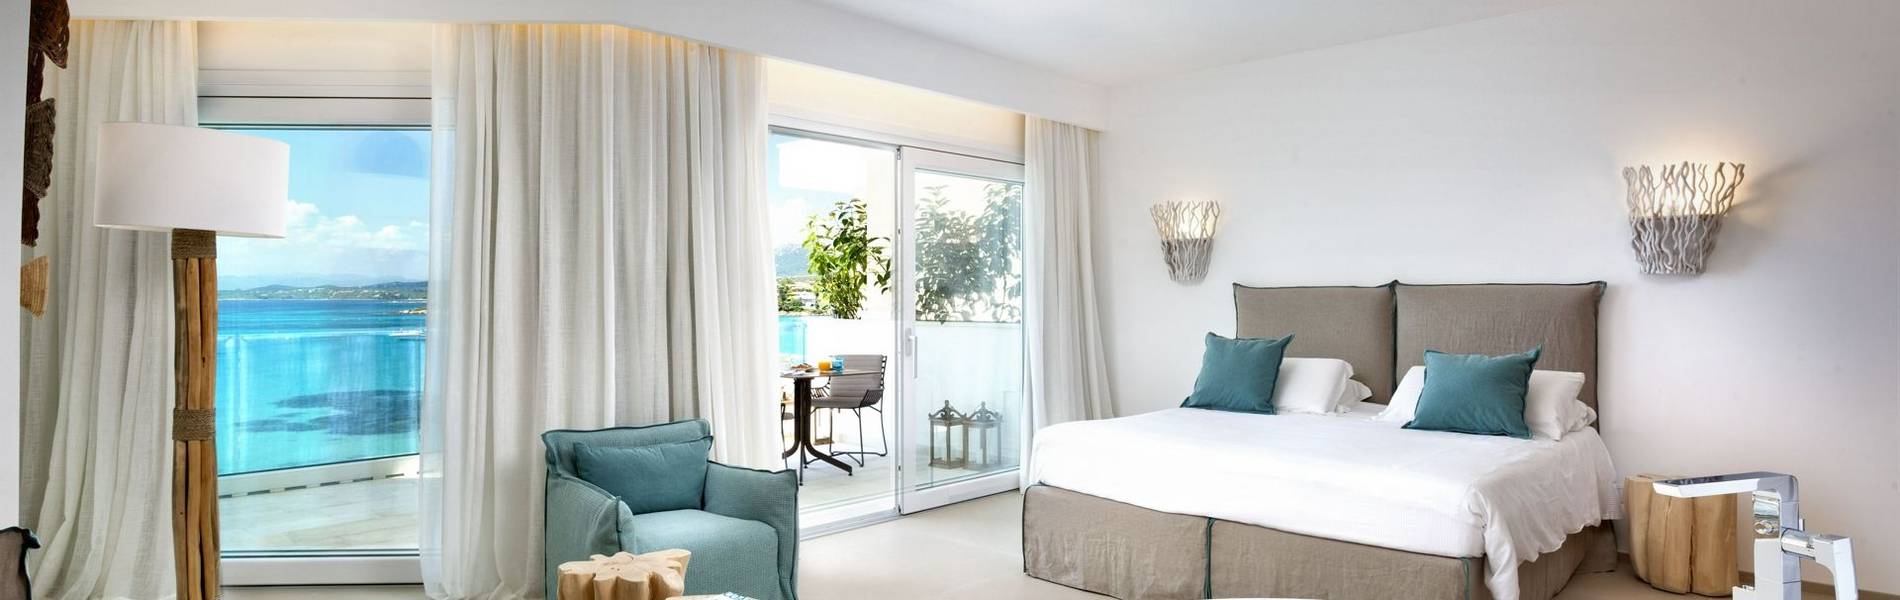 Pool Suite - Gabbiano Azzurro Hotel Sardinia3.jpg